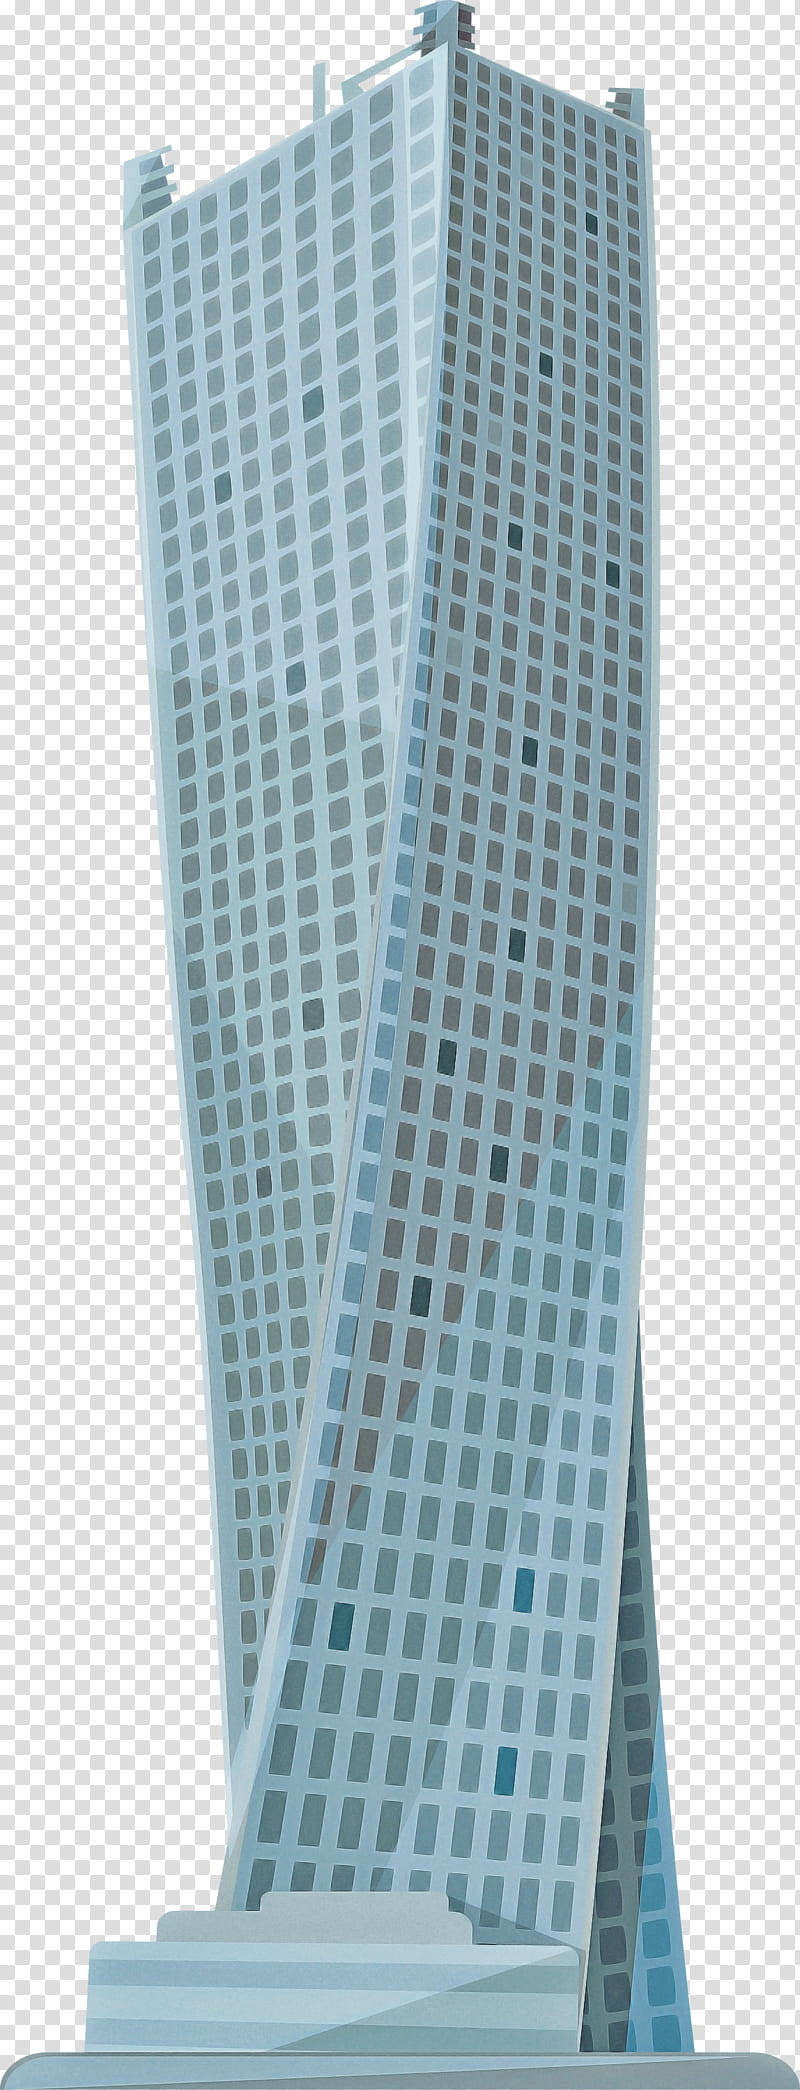 Arab Symbol, Burj Khalifa, Skyscraper, Lotte Tower, Bts, Bts Jin, Shanghai World Financial Center, Jin Mao Tower transparent background PNG clipart